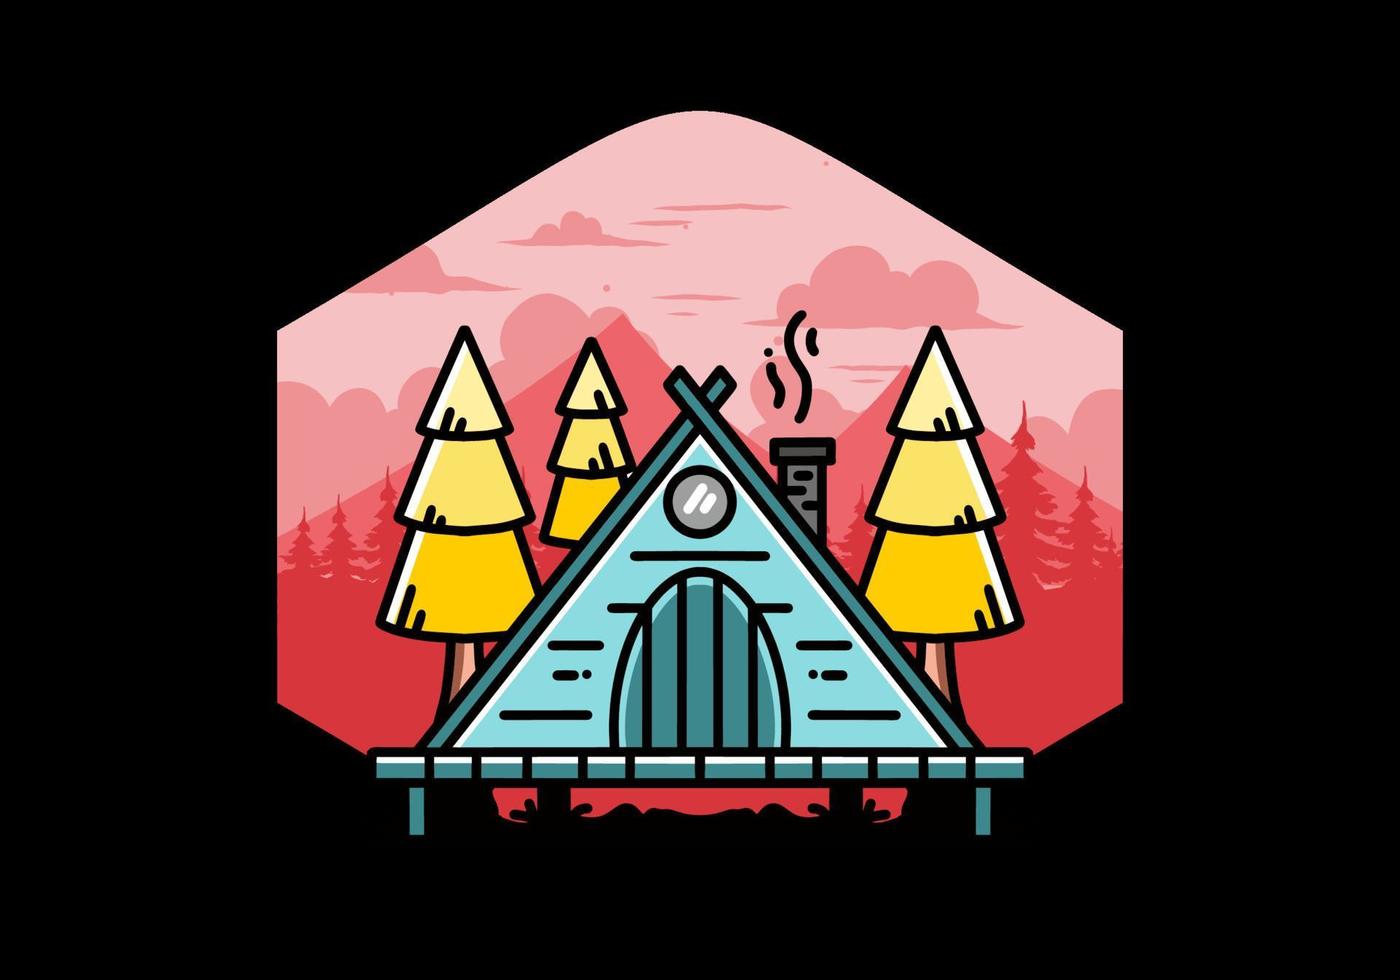 cabaña de madera triangular entre diseño de ilustración de árboles de pino vector